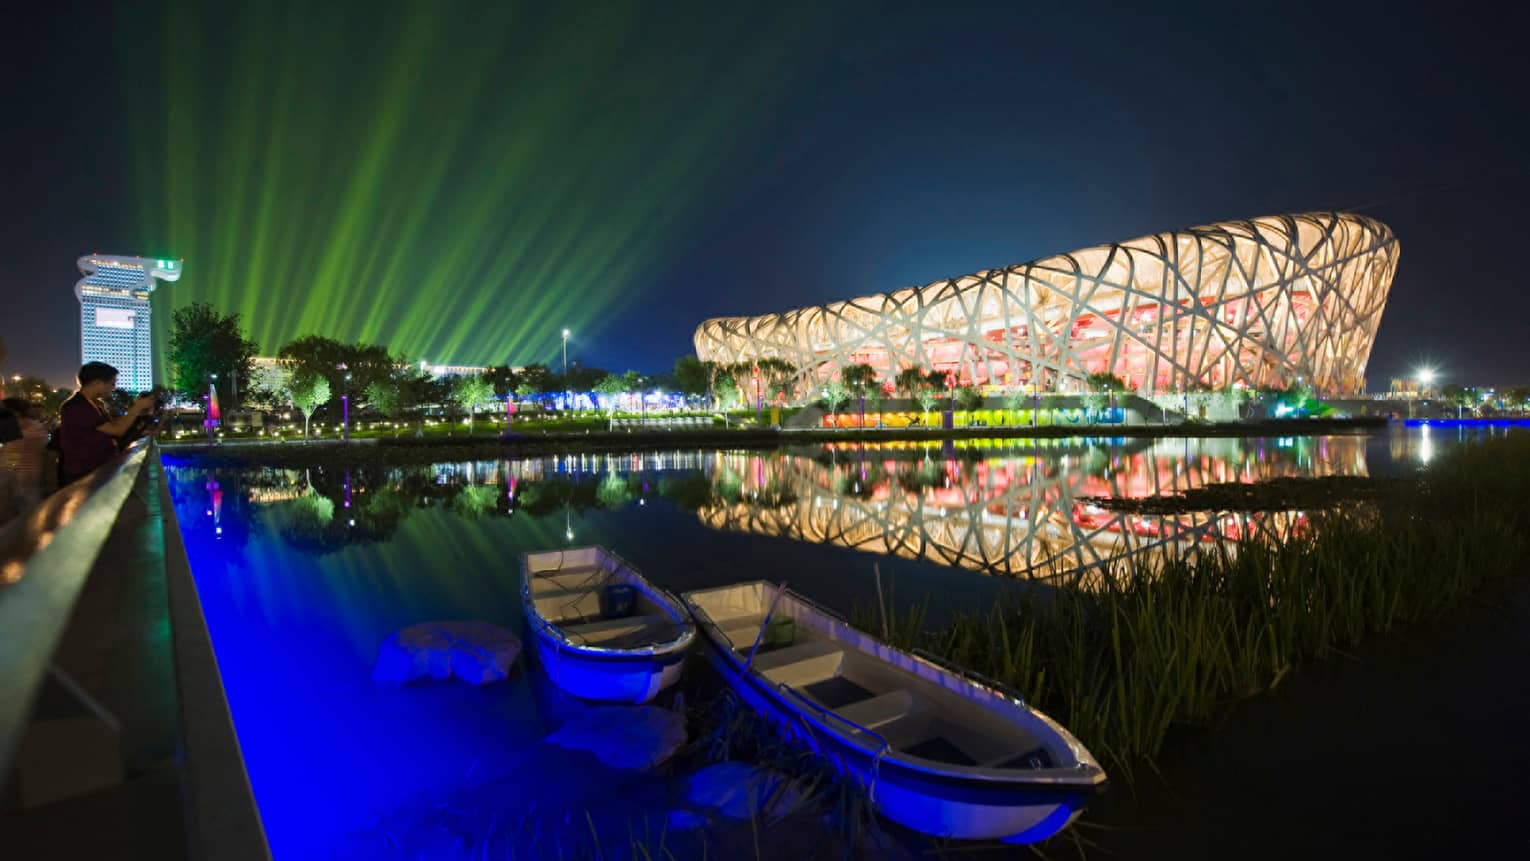 Exterior of Beijing National Stadium bird's nest-shaped building lit up at night